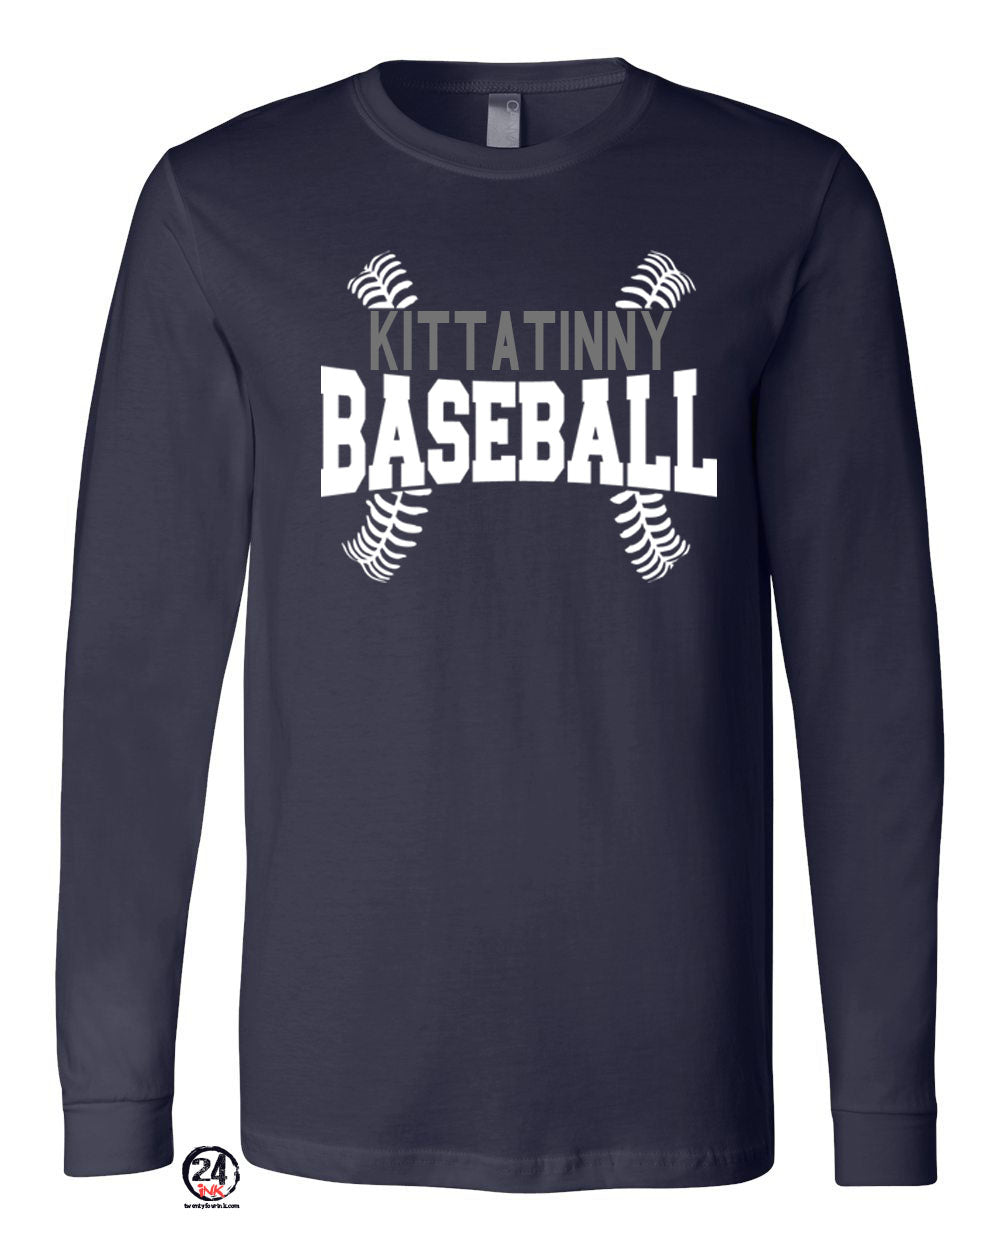 Kittatinny Baseball Long Sleeve Shirt